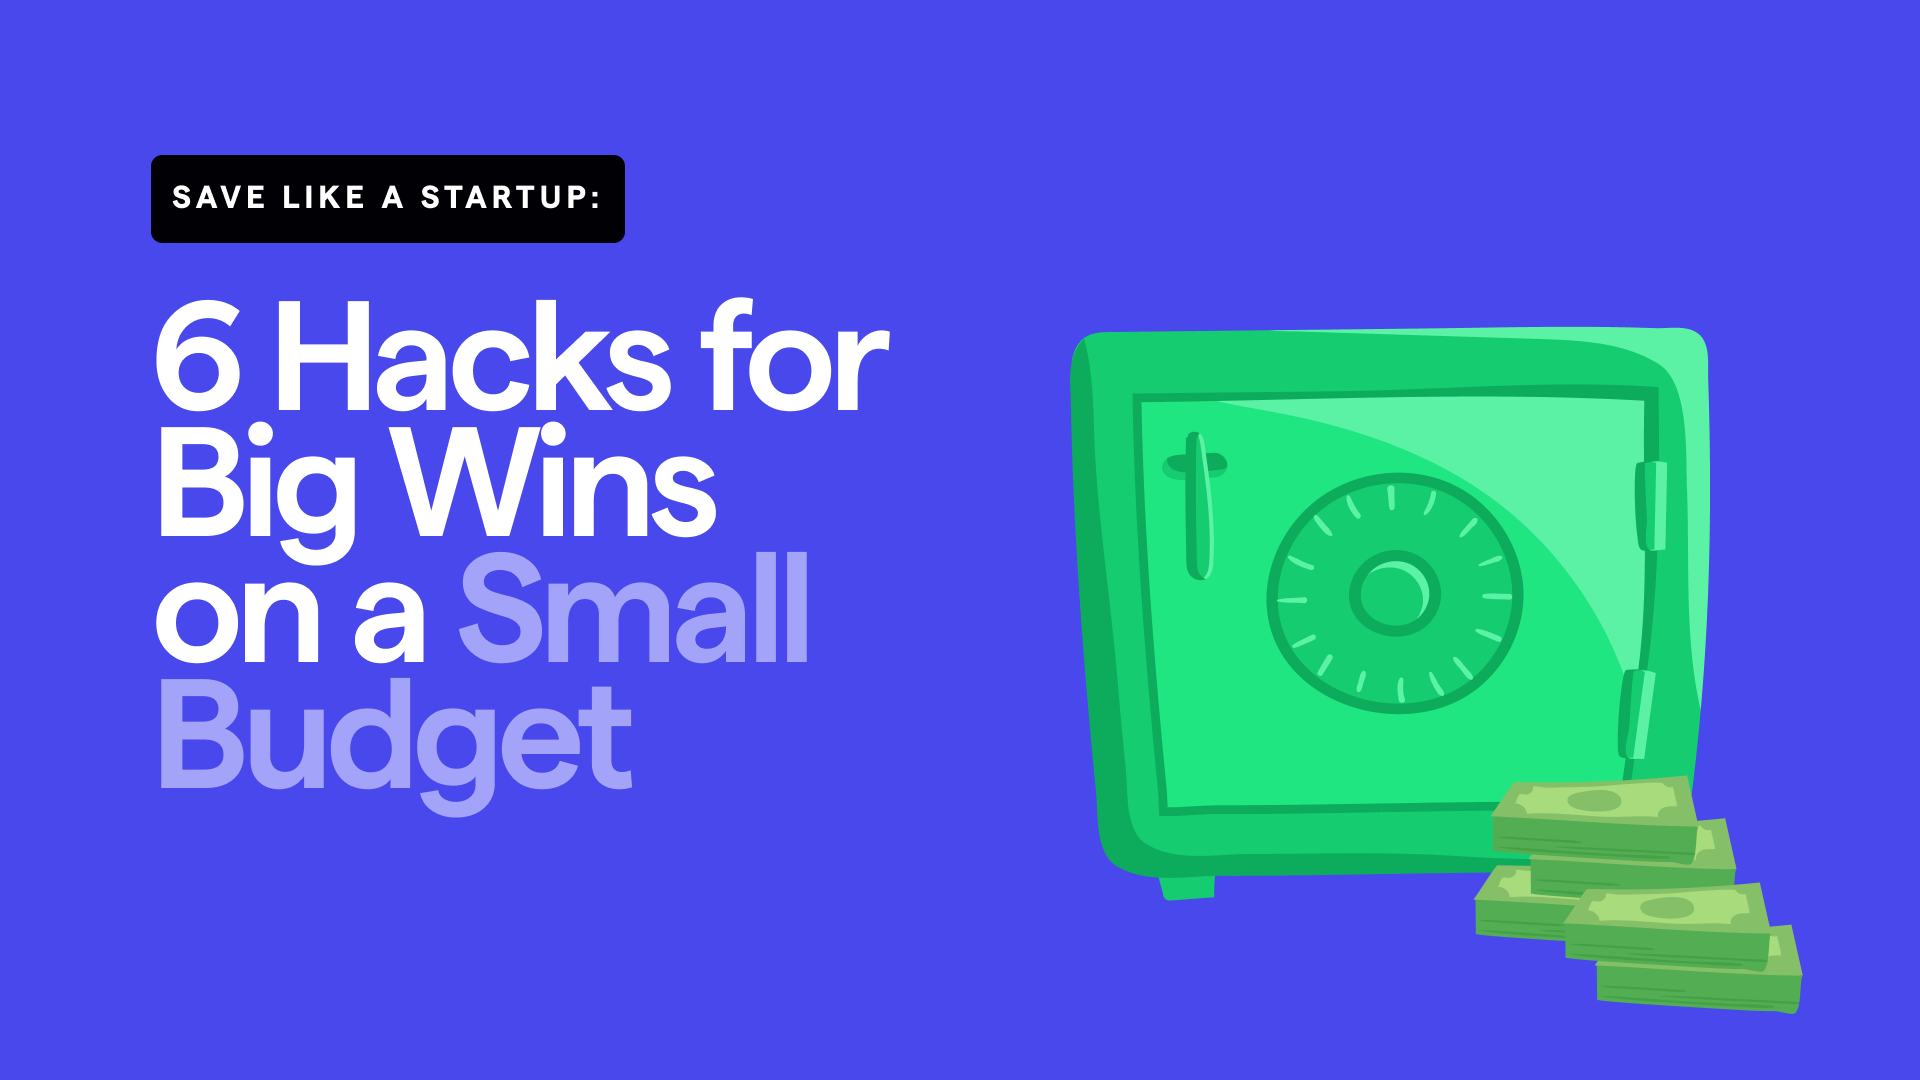 Save Like a Startup: 6 Hacks for Big Wins on a Small Budget